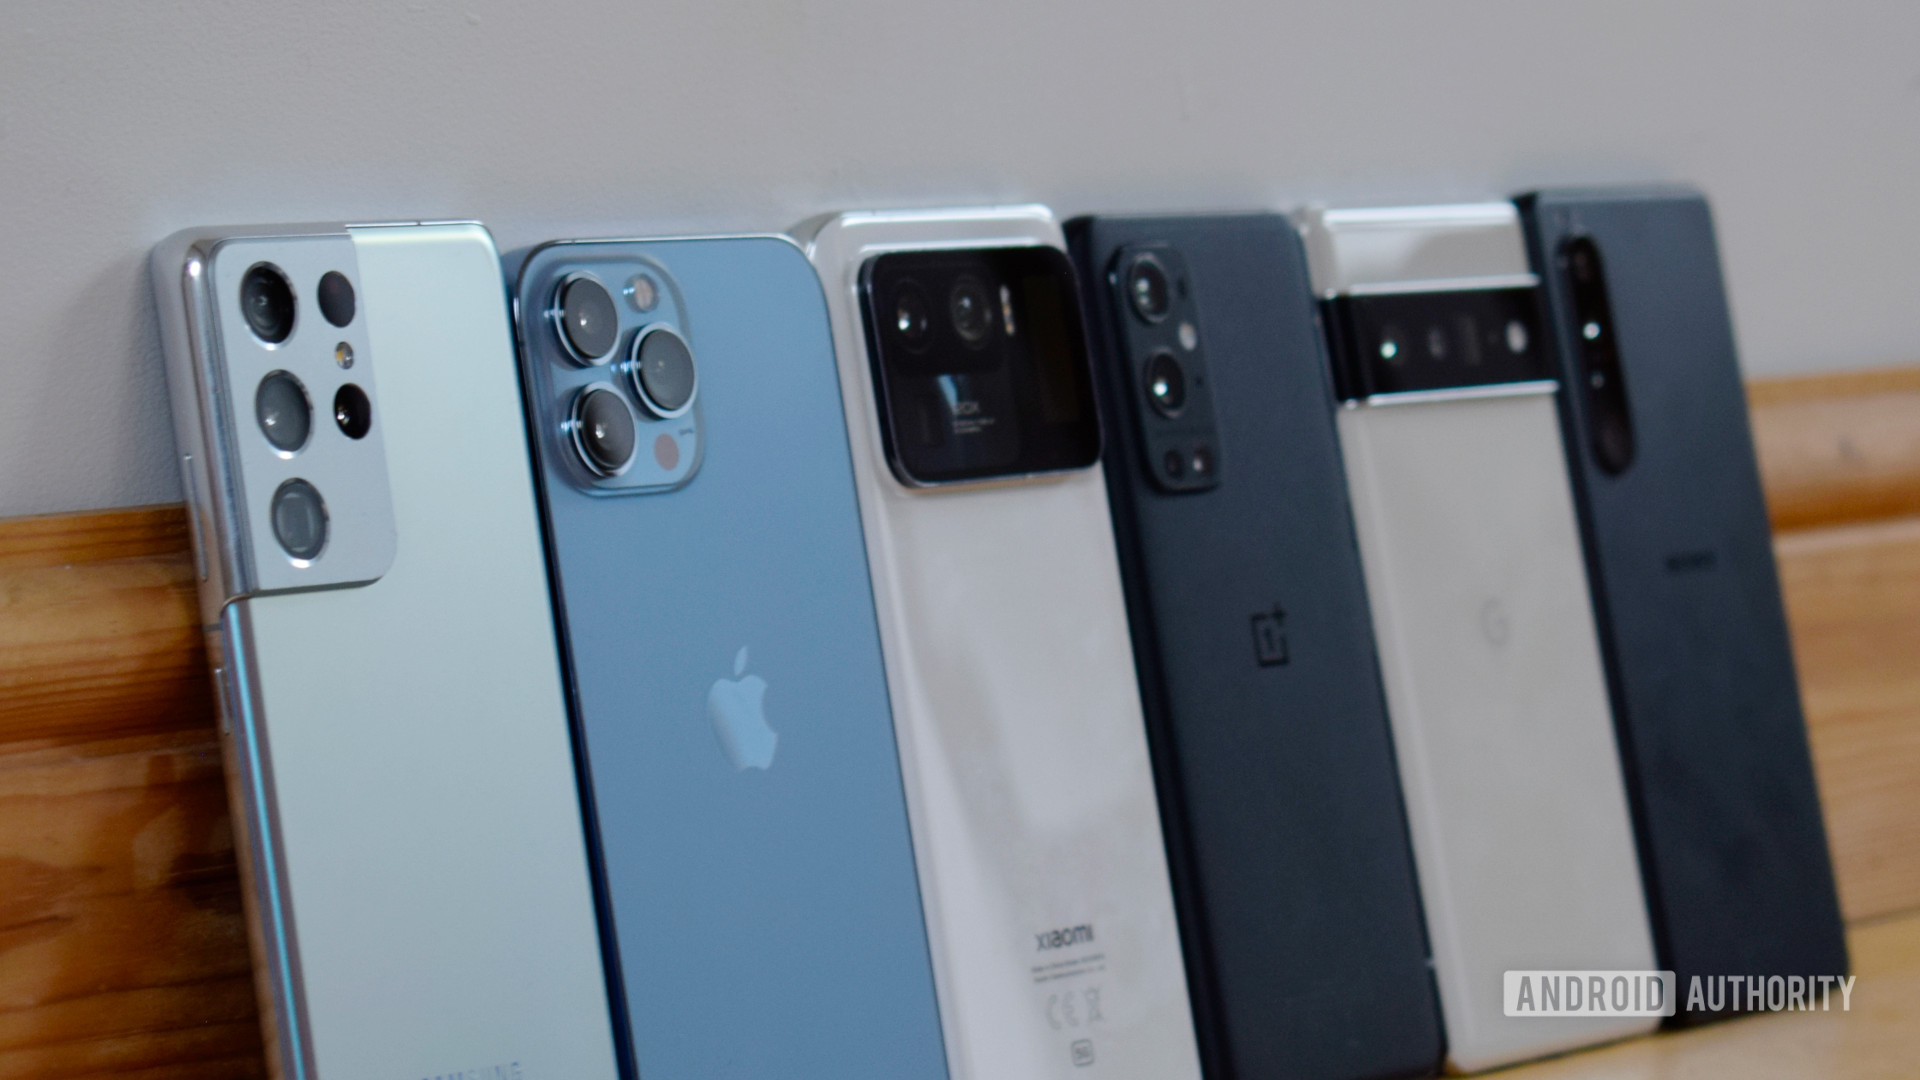 Best Smartphone Cameras 2021 lined up - Apple iPhone 13 Pro Max, Google Pixel 6 Pro, OnePlus 9 Pro, Samsung Galaxy S21 Ultra, Sony Xperia 1 III, Xiaomi Mi 11 Ultra